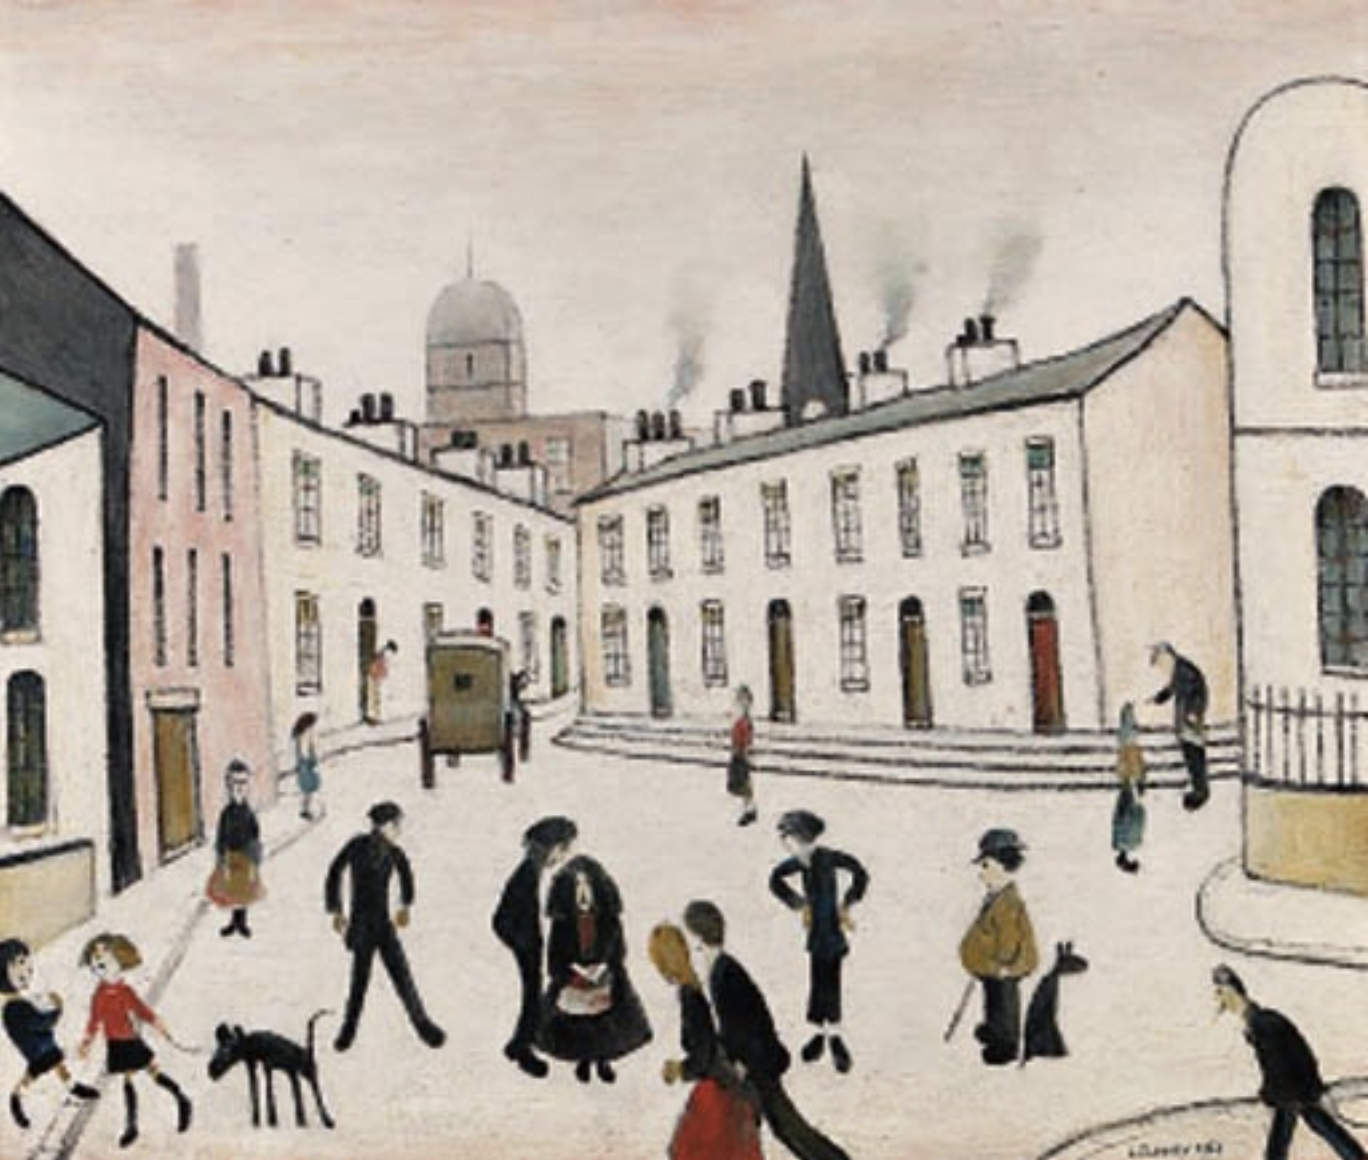 Street Scene, Lancashire (1961) by Laurence Stephen Lowry (1887 - 1976), English artist.